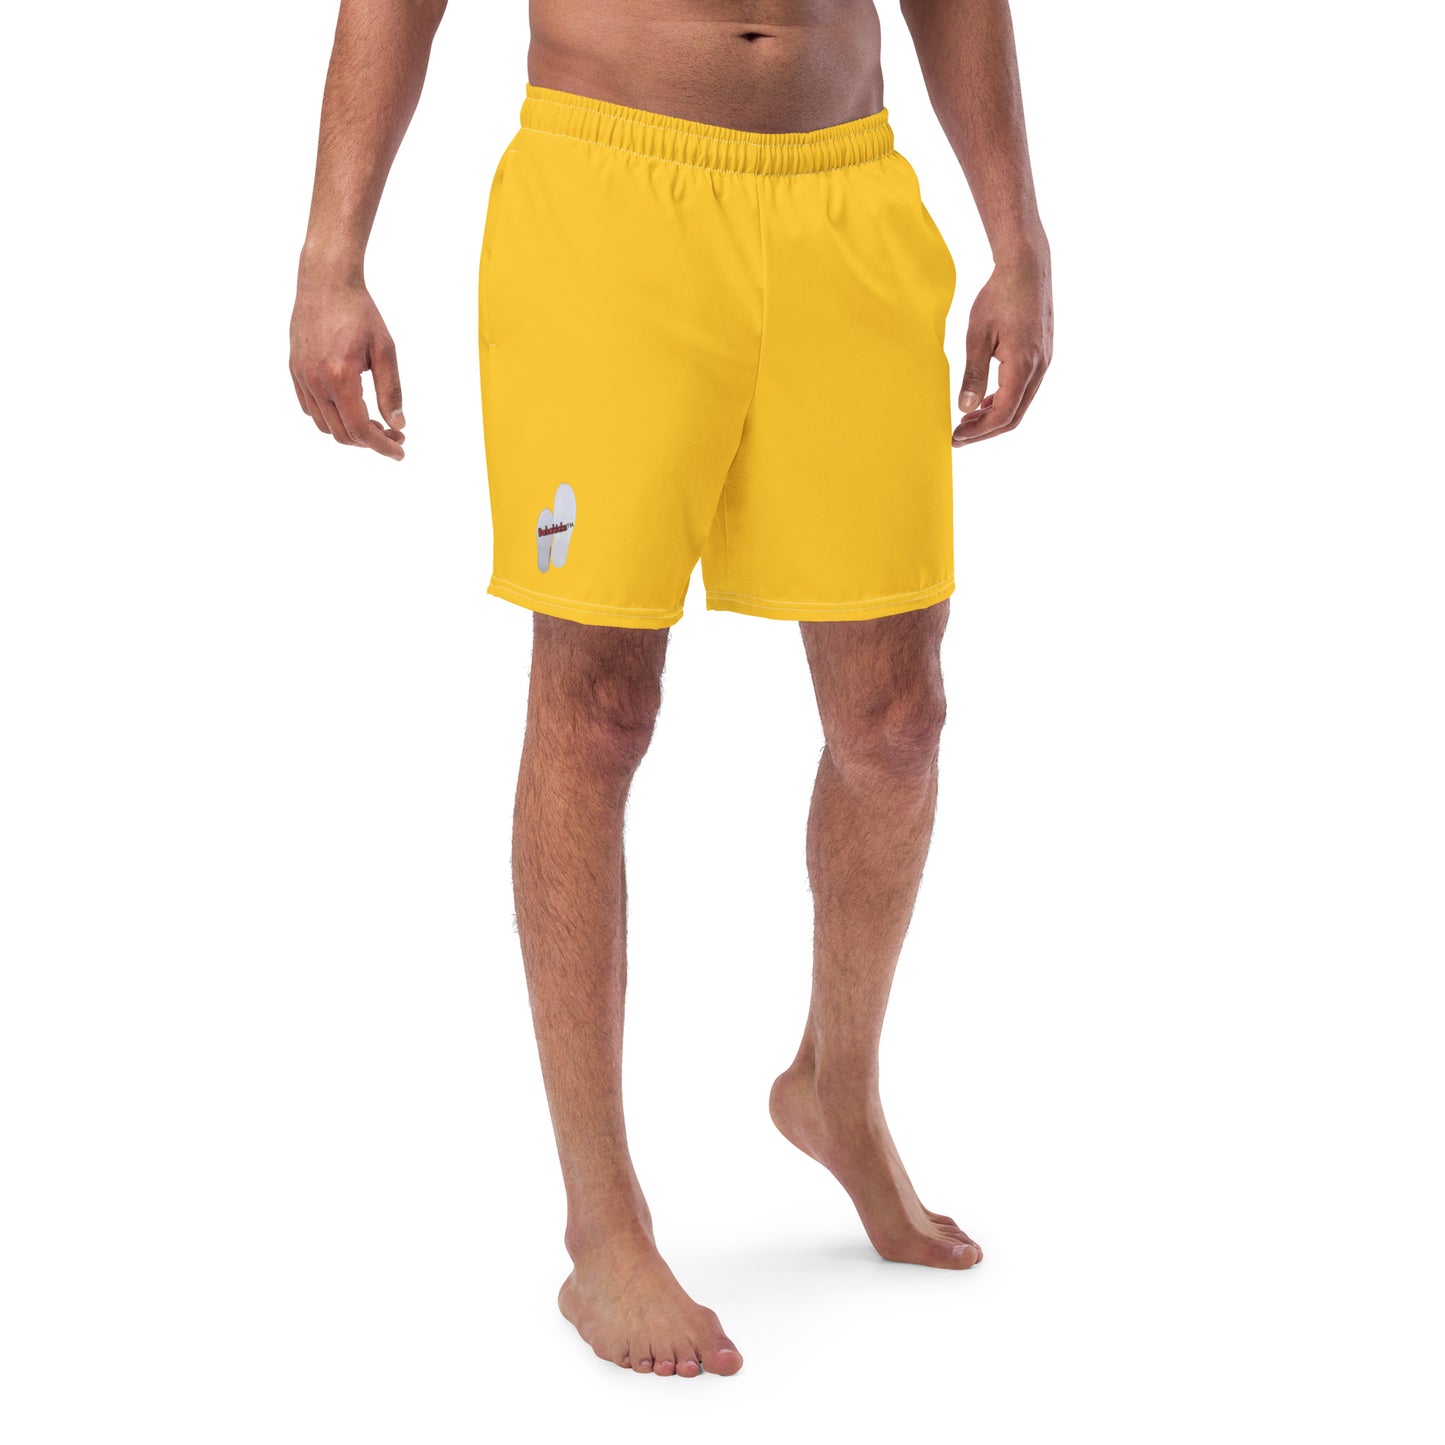 True Yellow Swim Trunks by Bahakicks™